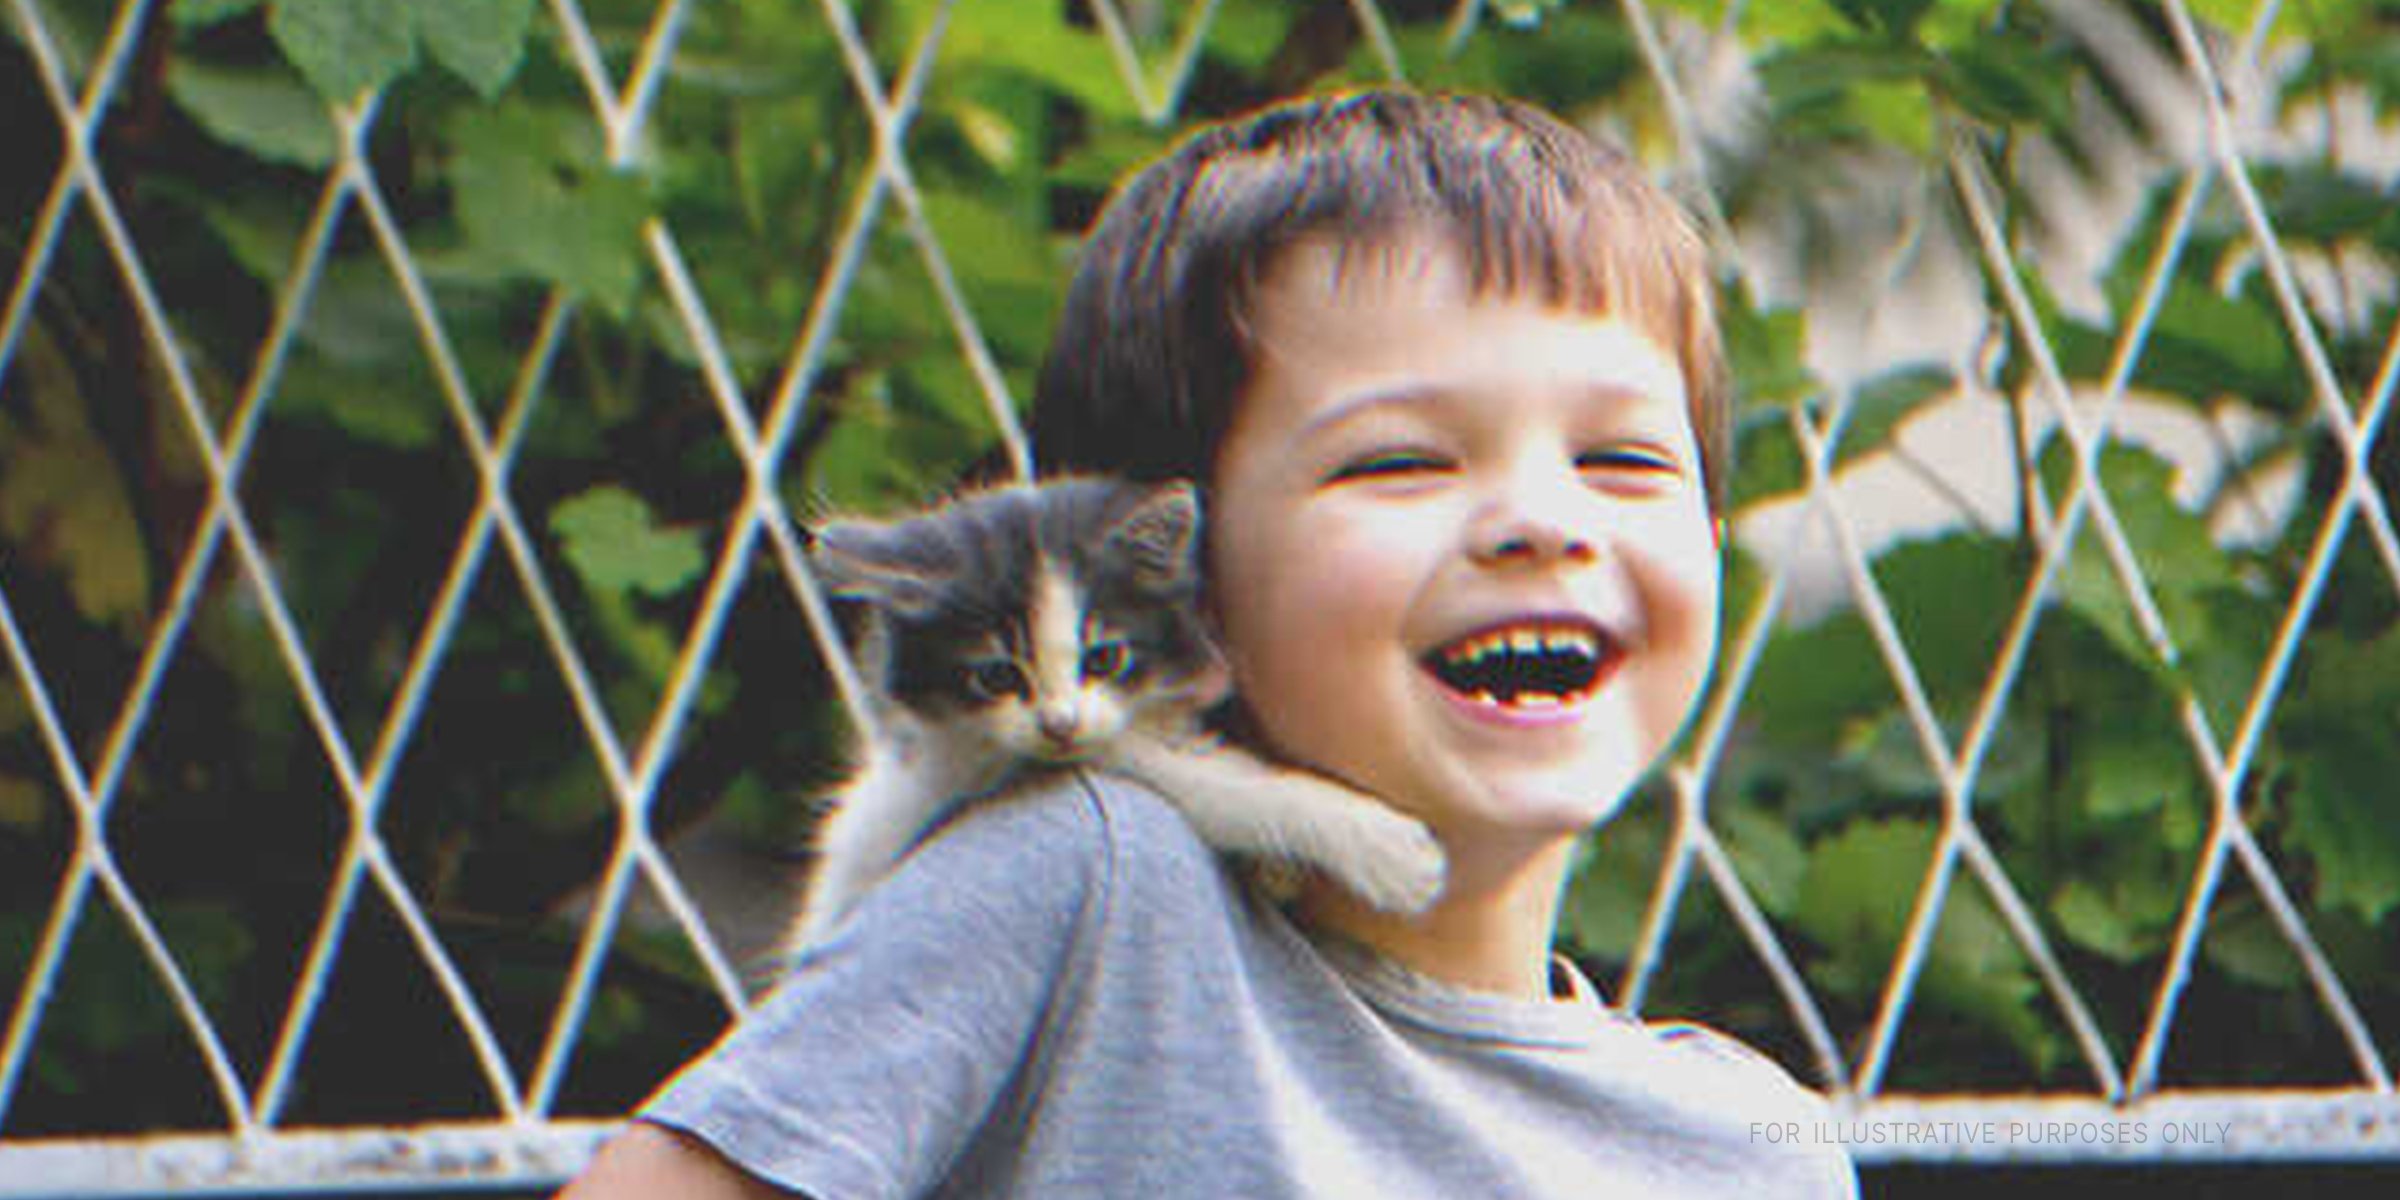 Smiling Boy With Kitten | Source: Shutterstock